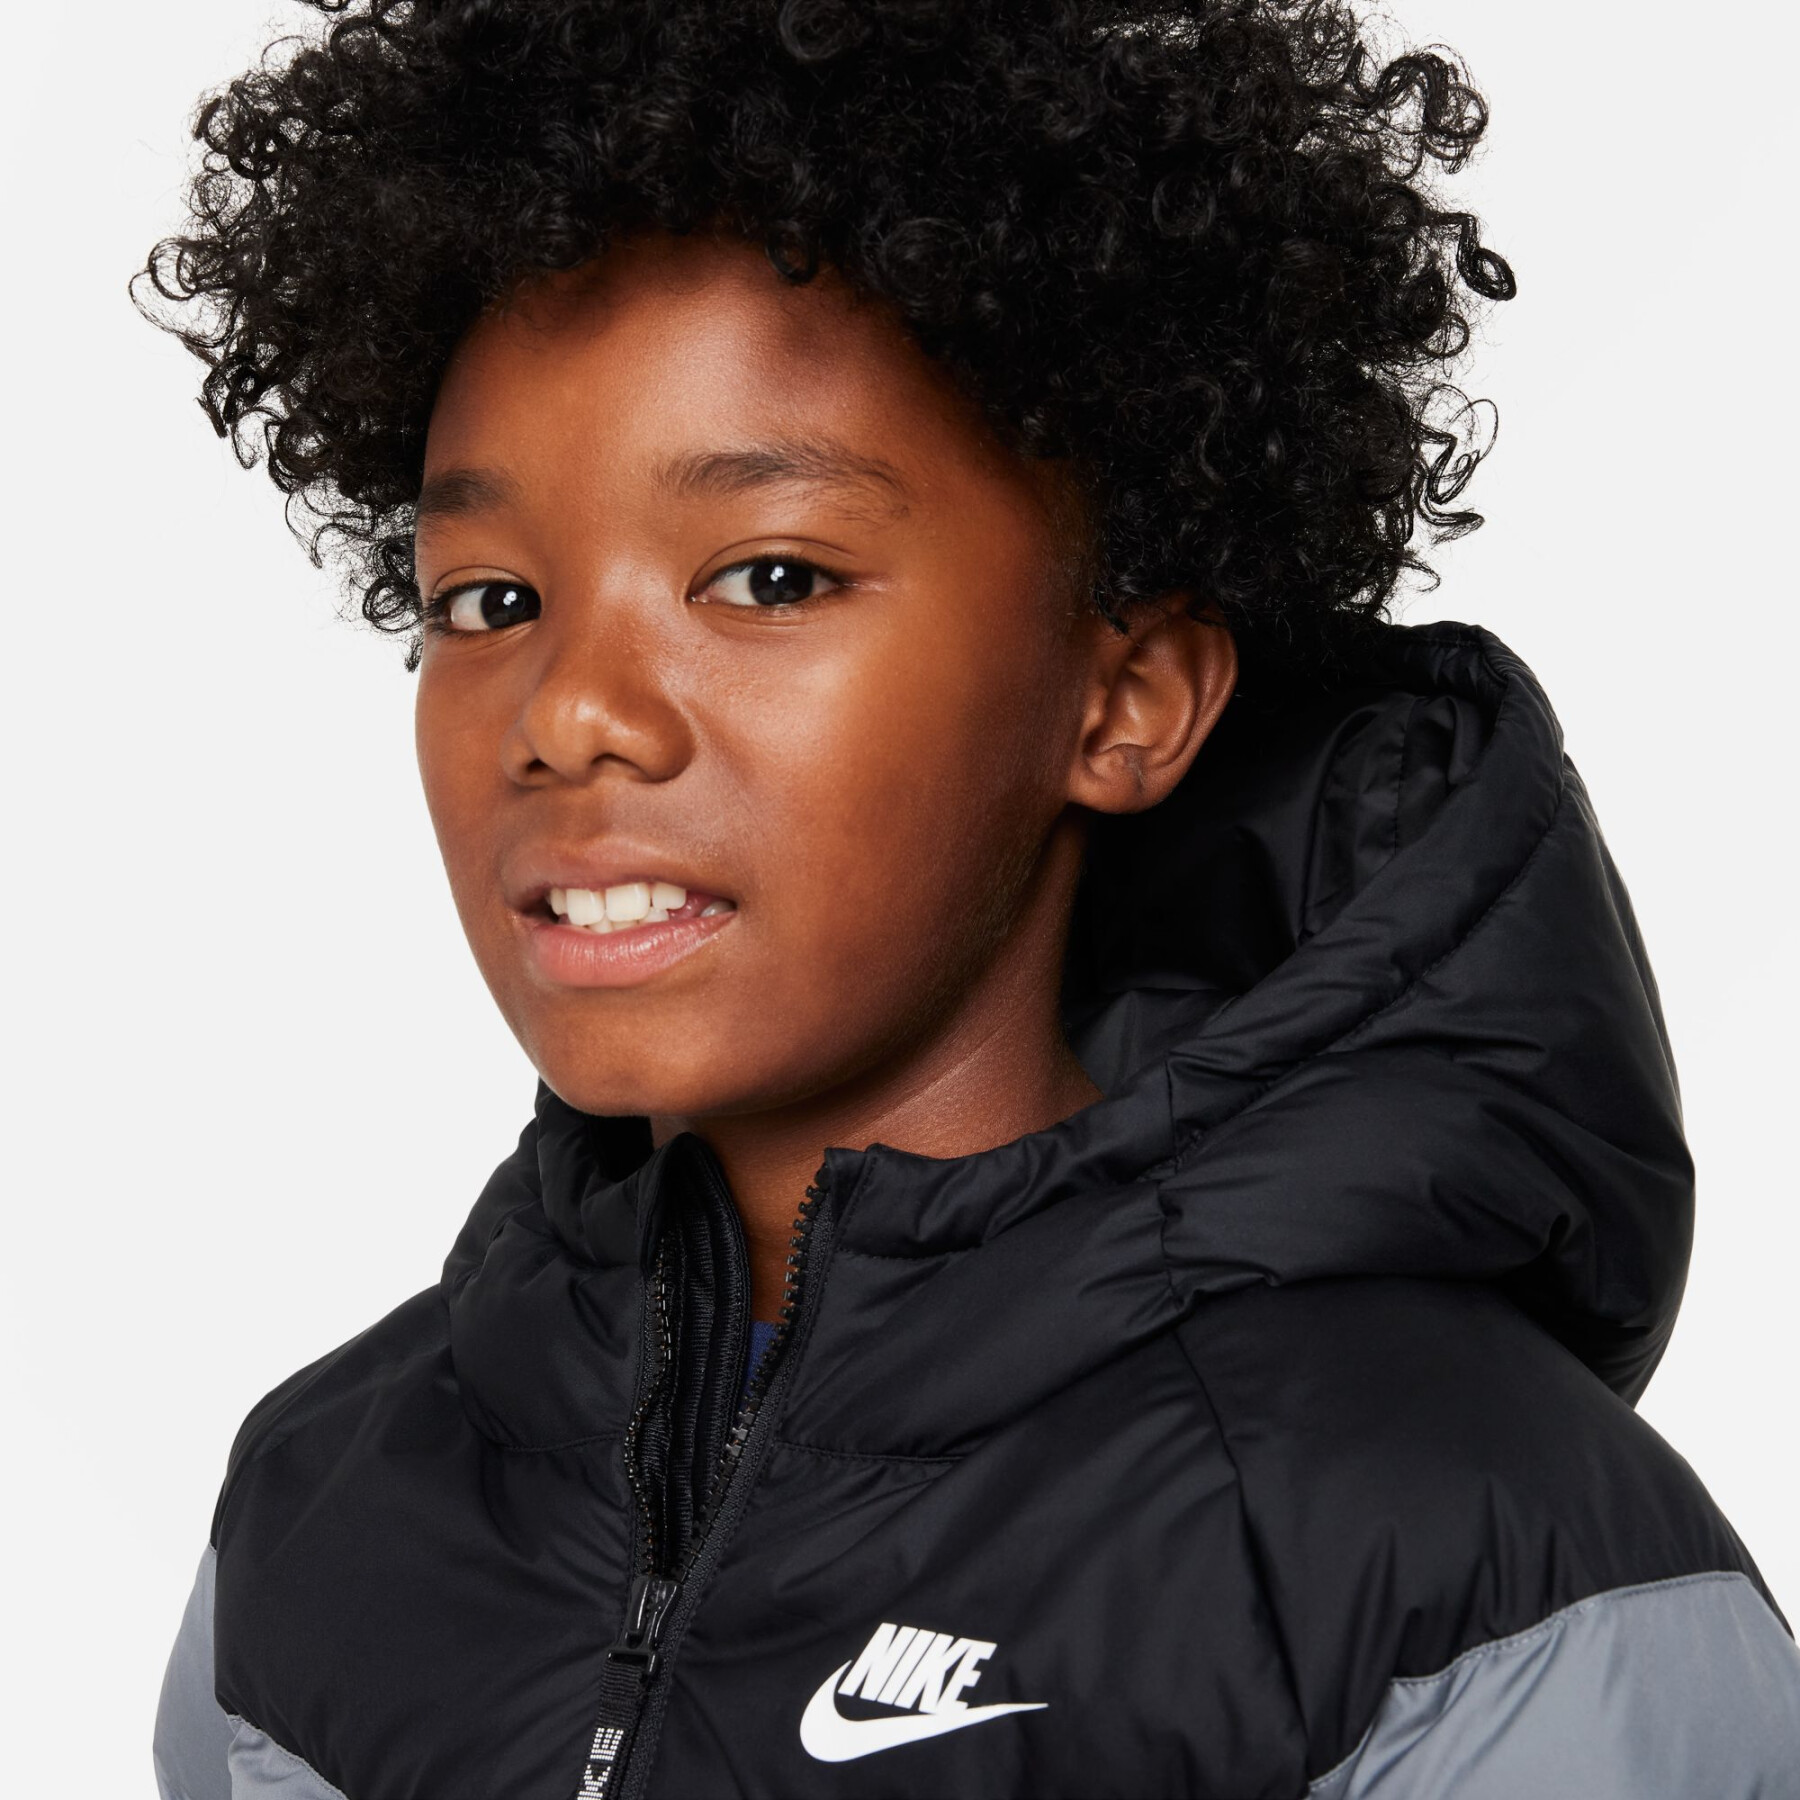 Kid's Hooded Puffer Jacket Nike